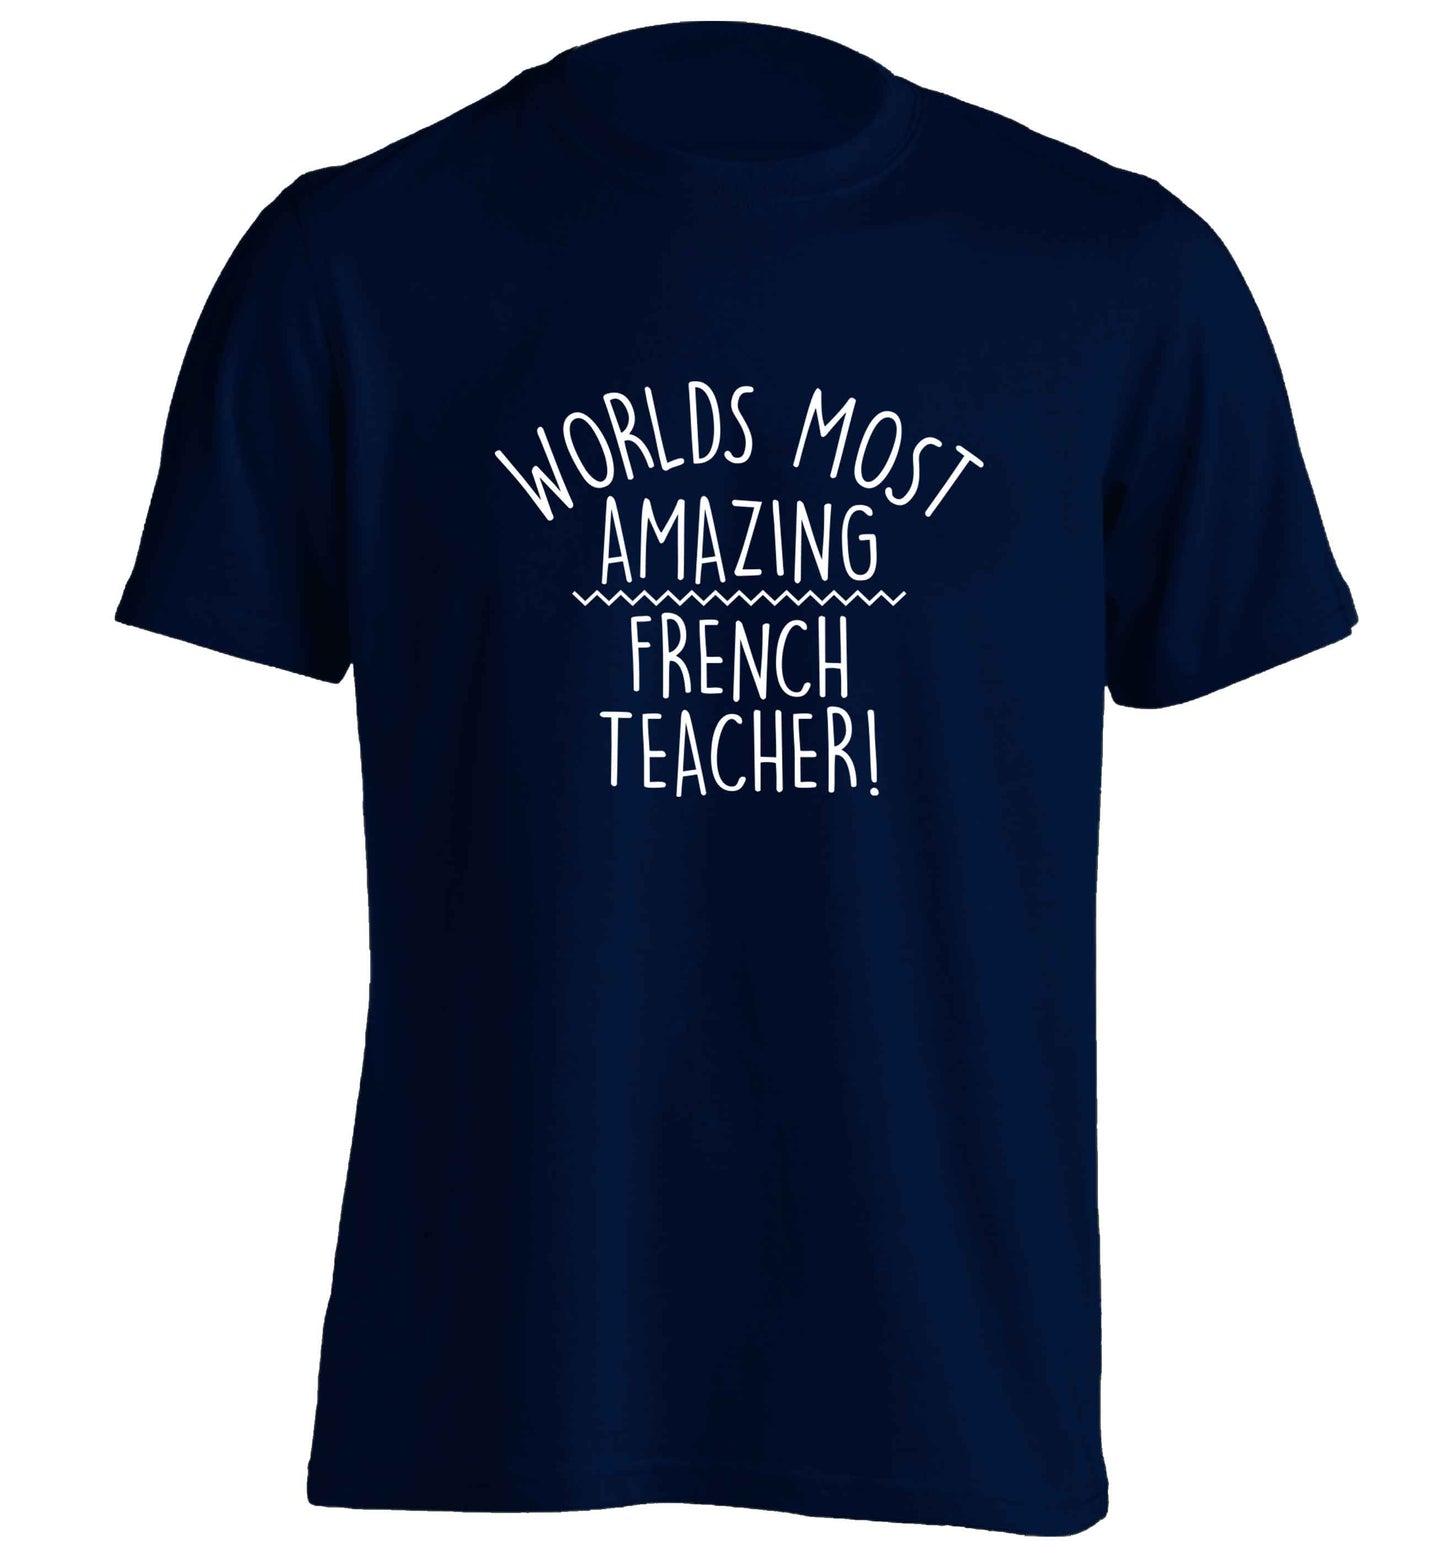 Worlds most amazing French teacher adults unisex navy Tshirt 2XL